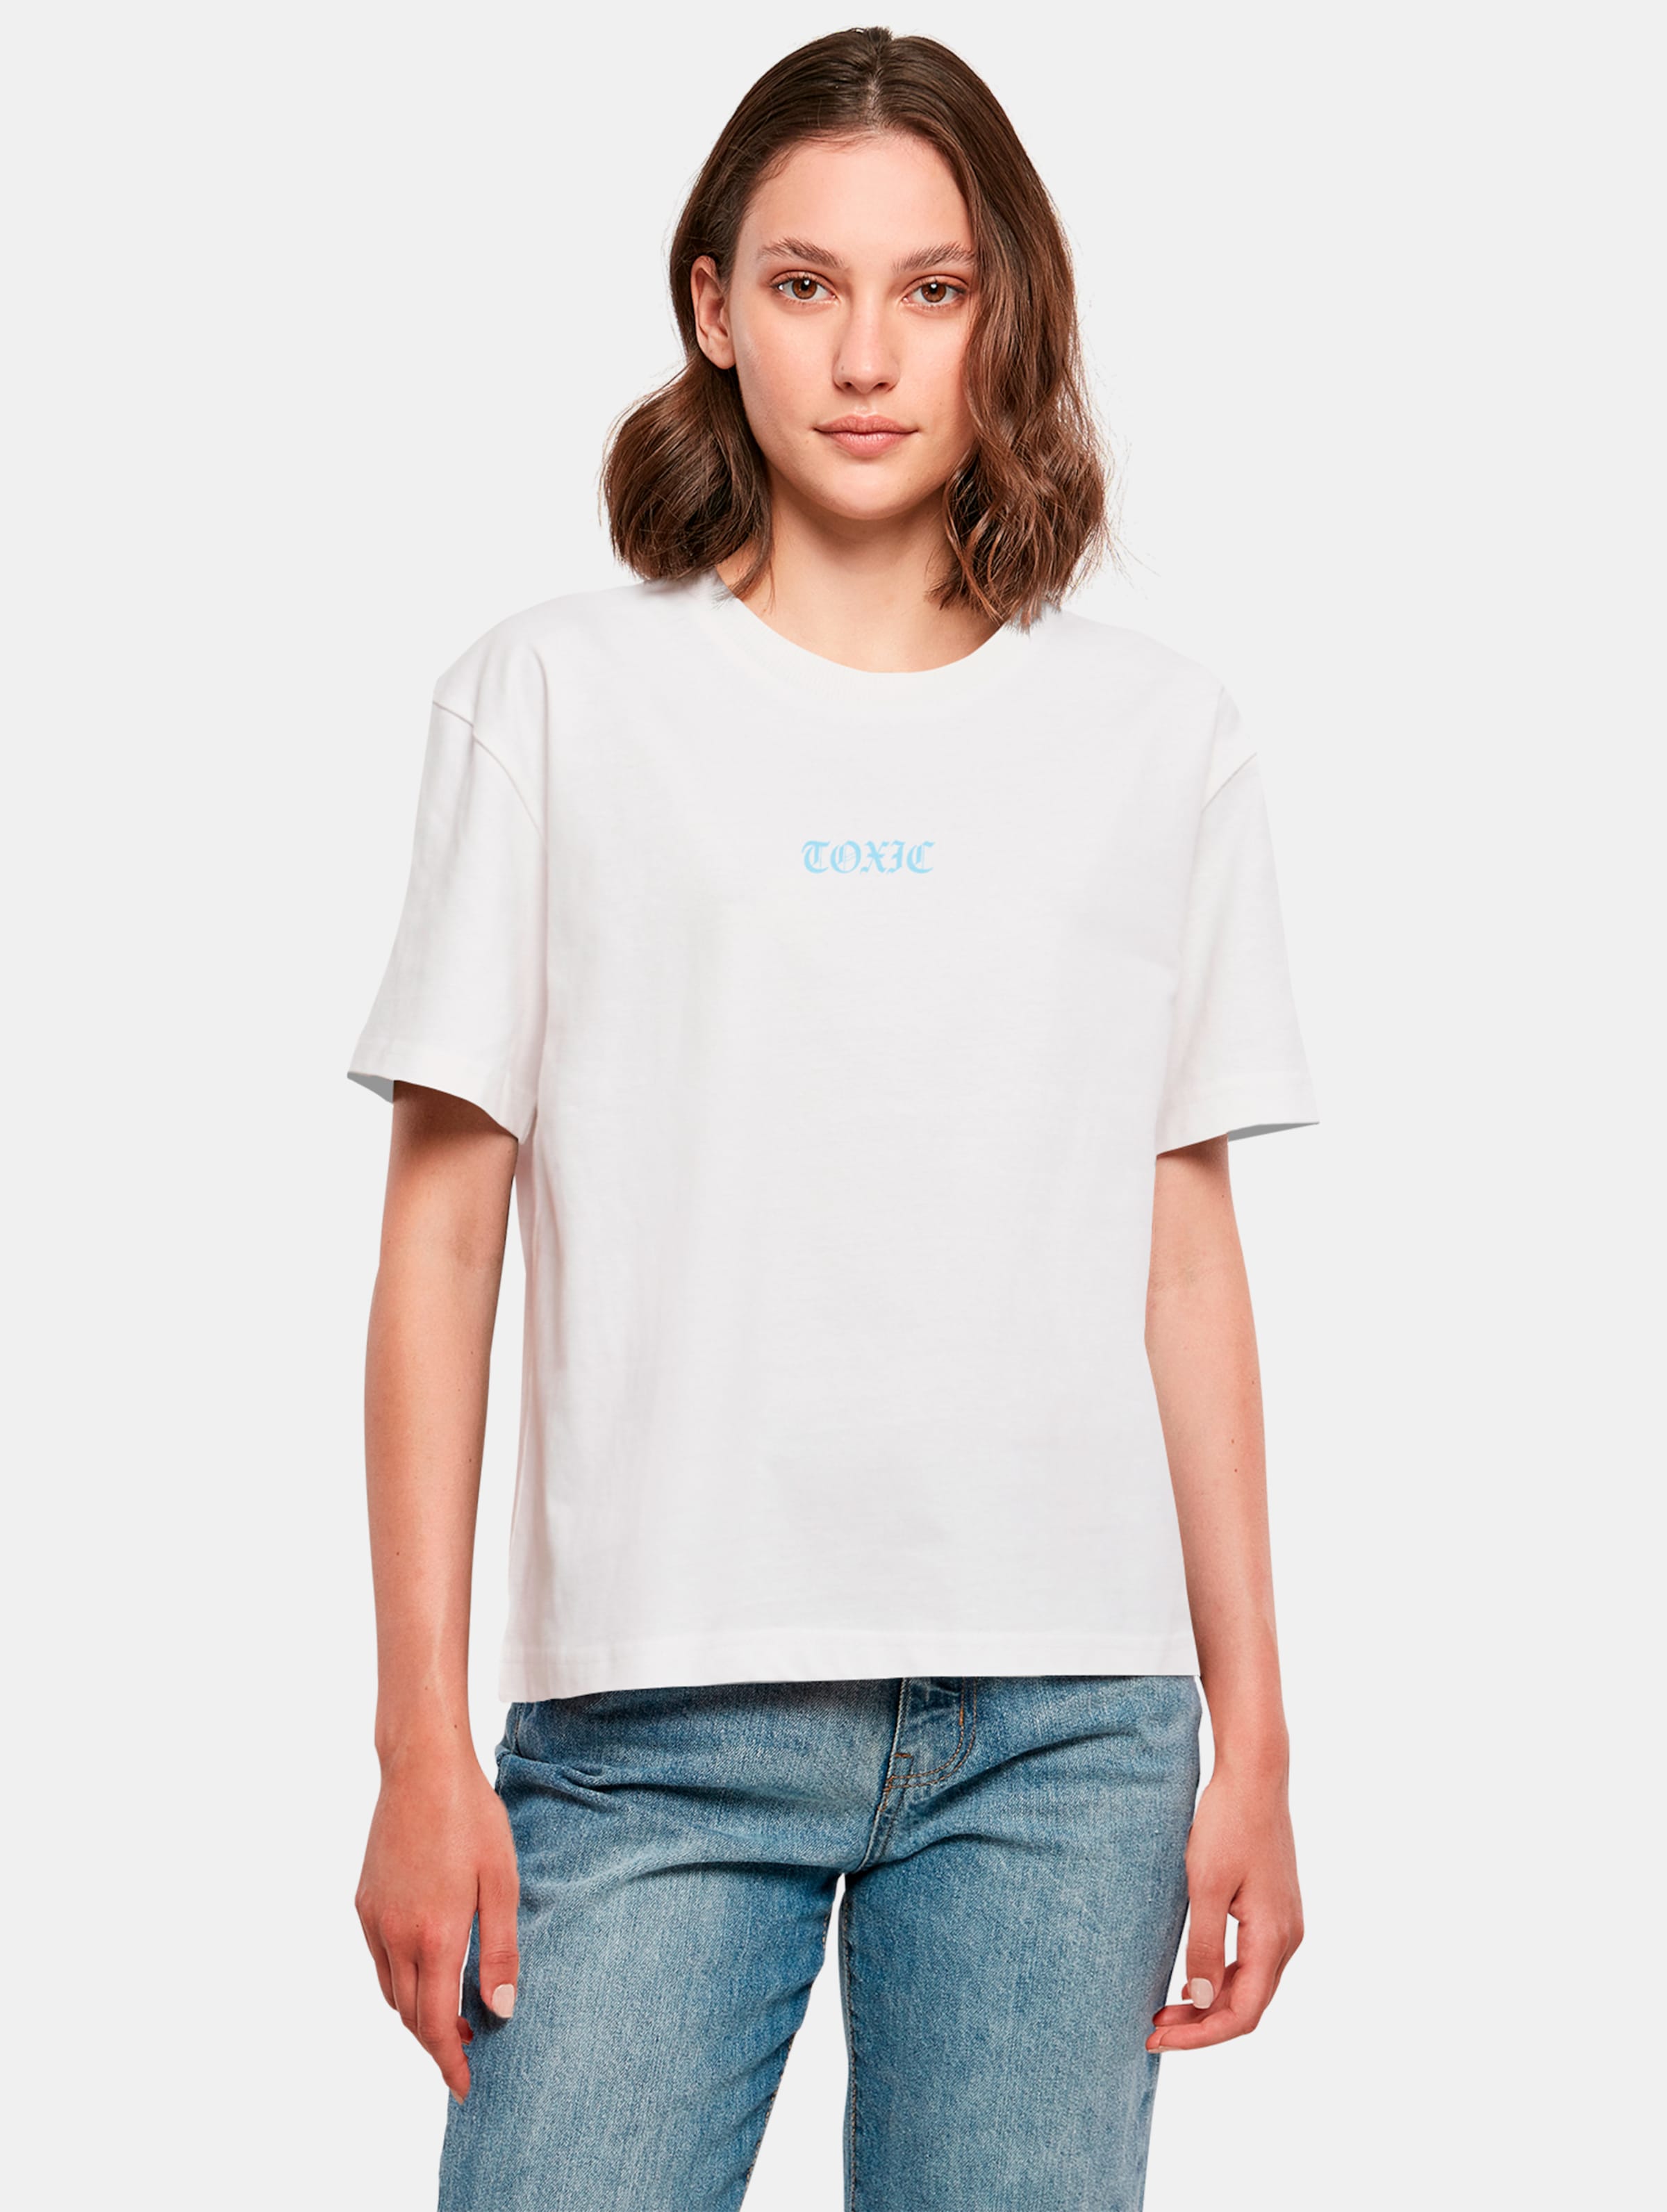 Miss Tee Toxic Snake T-Shirts Frauen,Unisex op kleur wit, Maat L